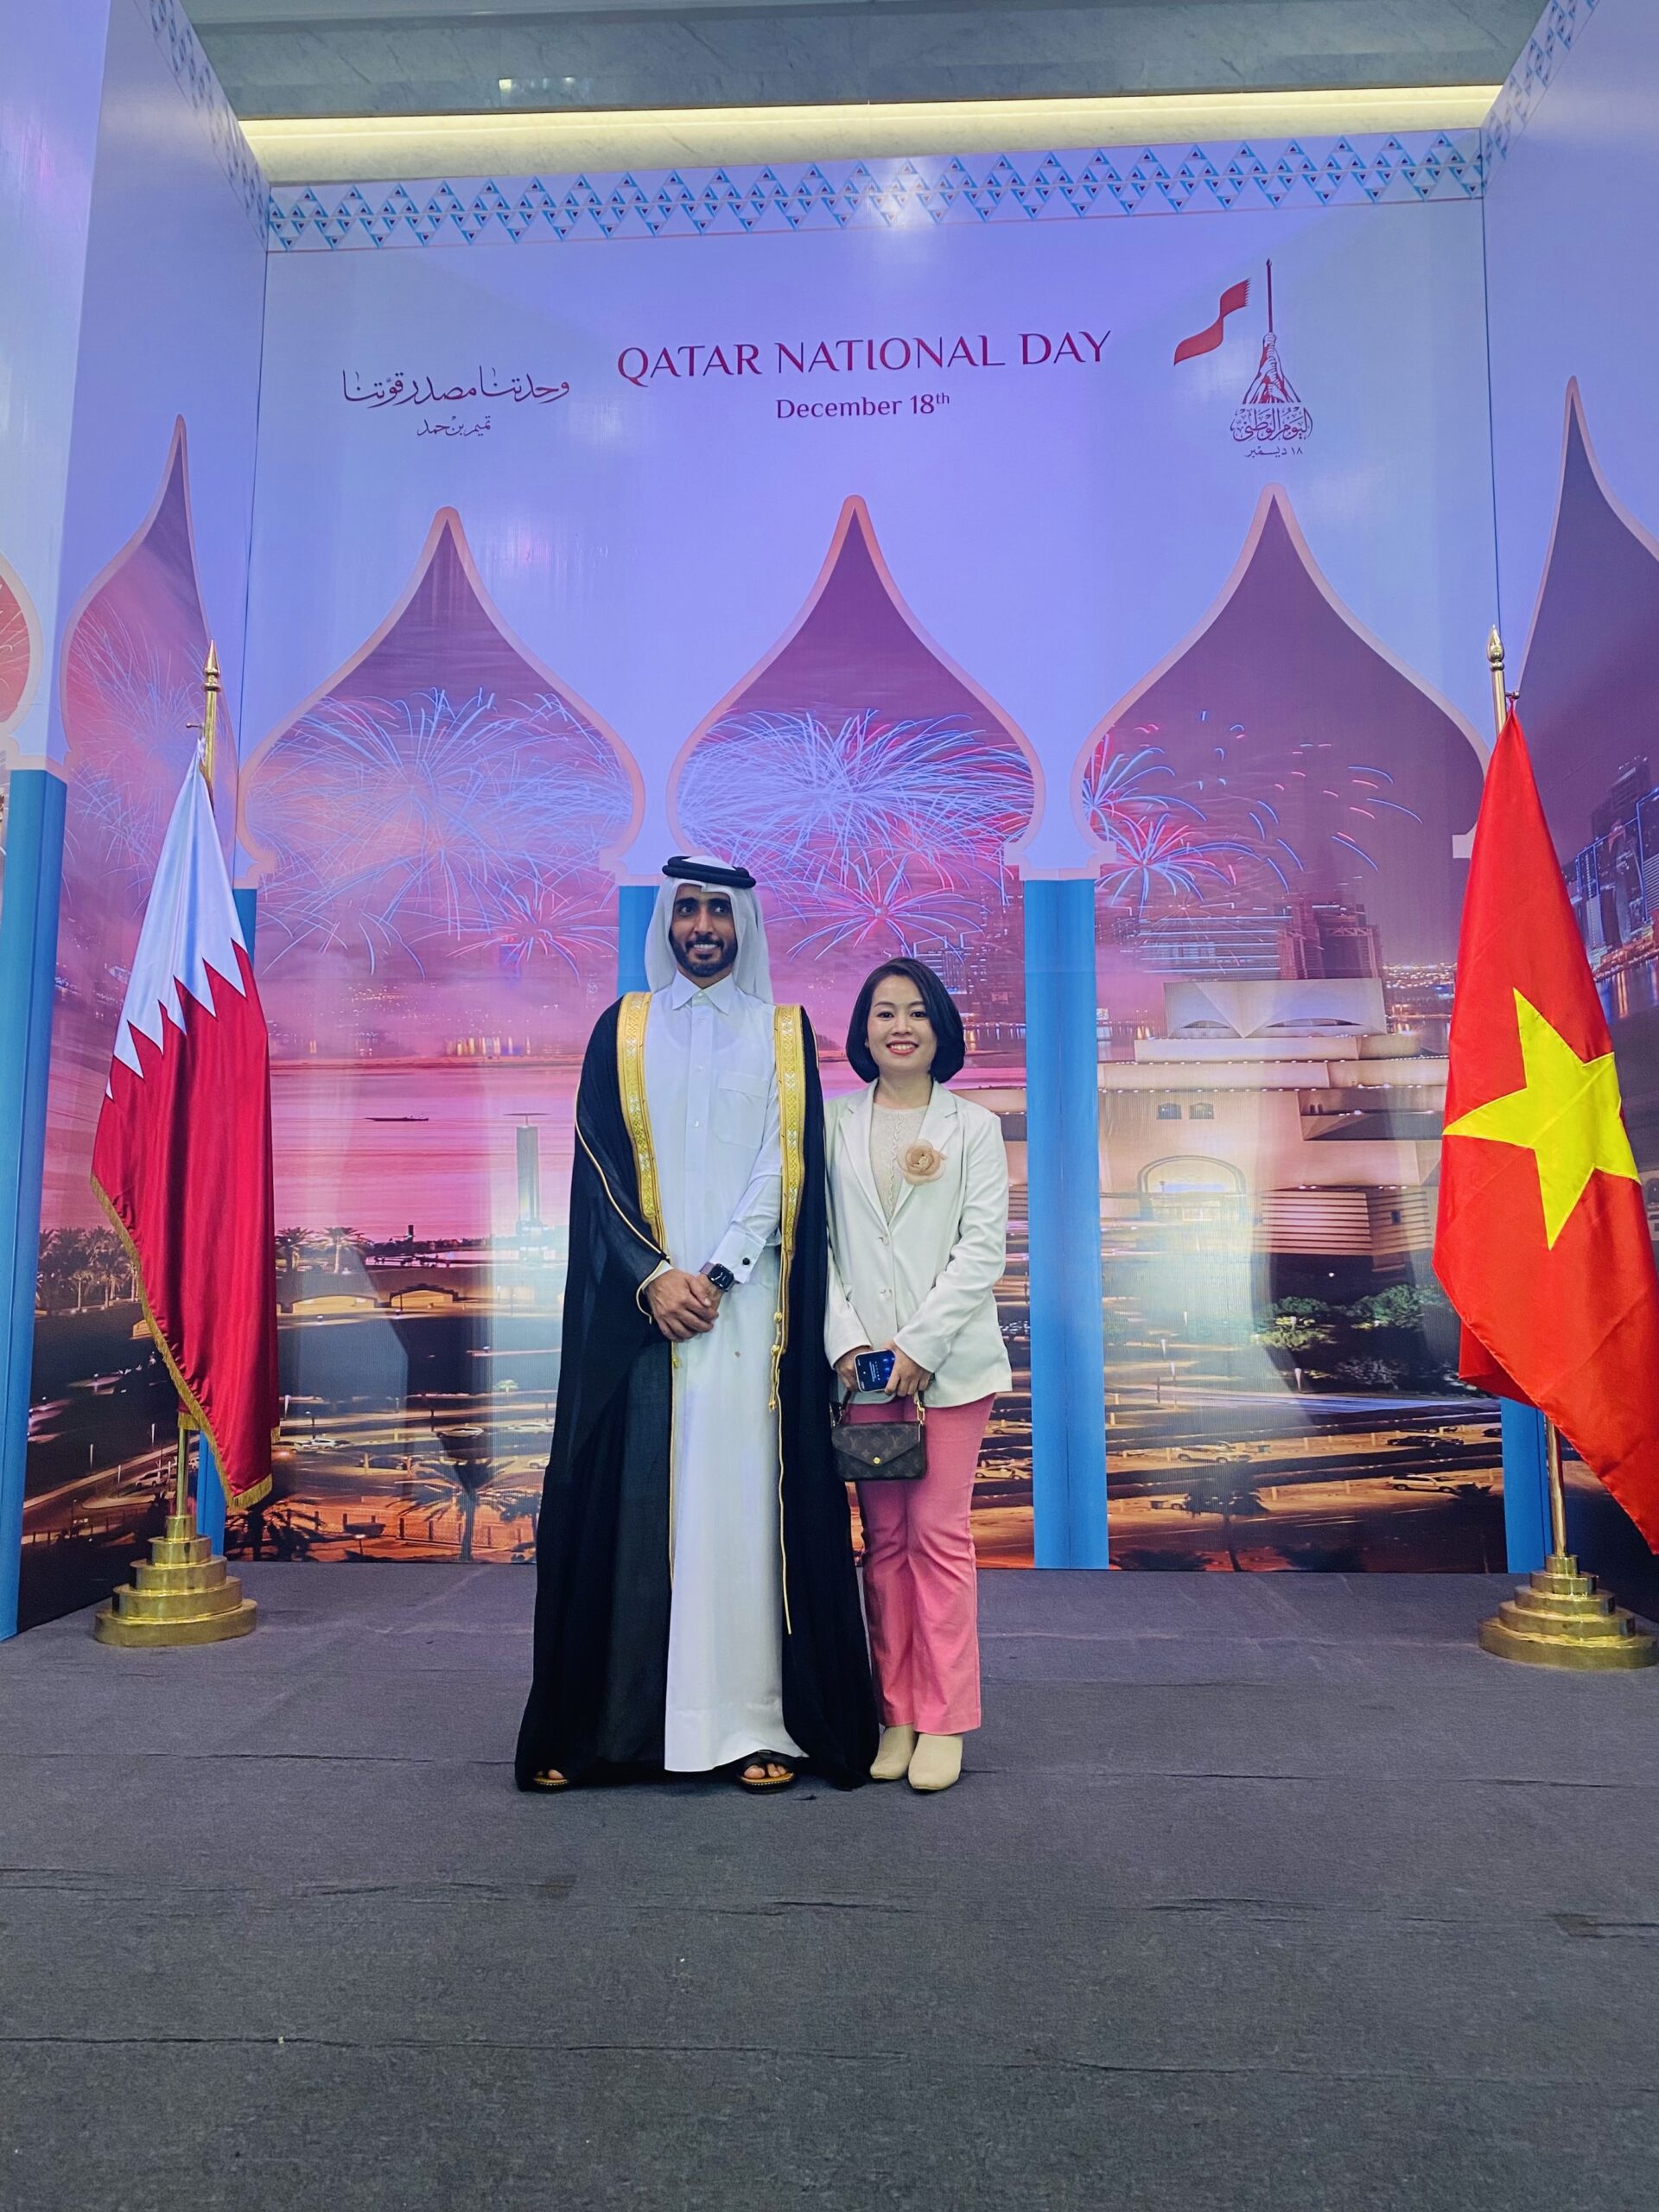 Oud Vietnam celebrates National Day of Qatar at Embassy in Hanoi.